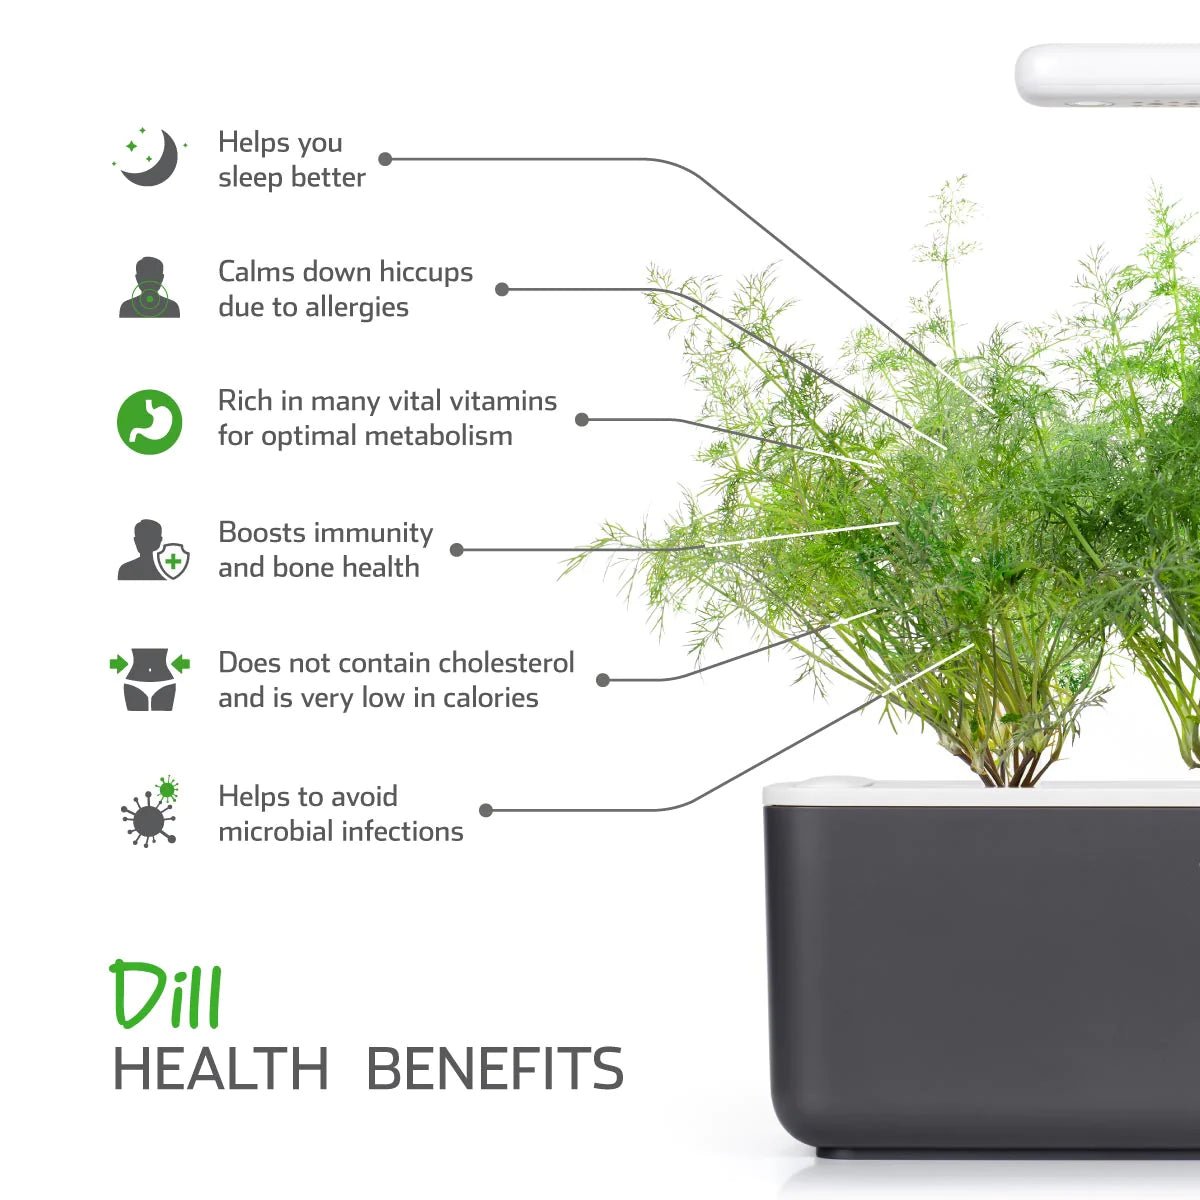 Dill Plant Pods - Green Thumb Depot